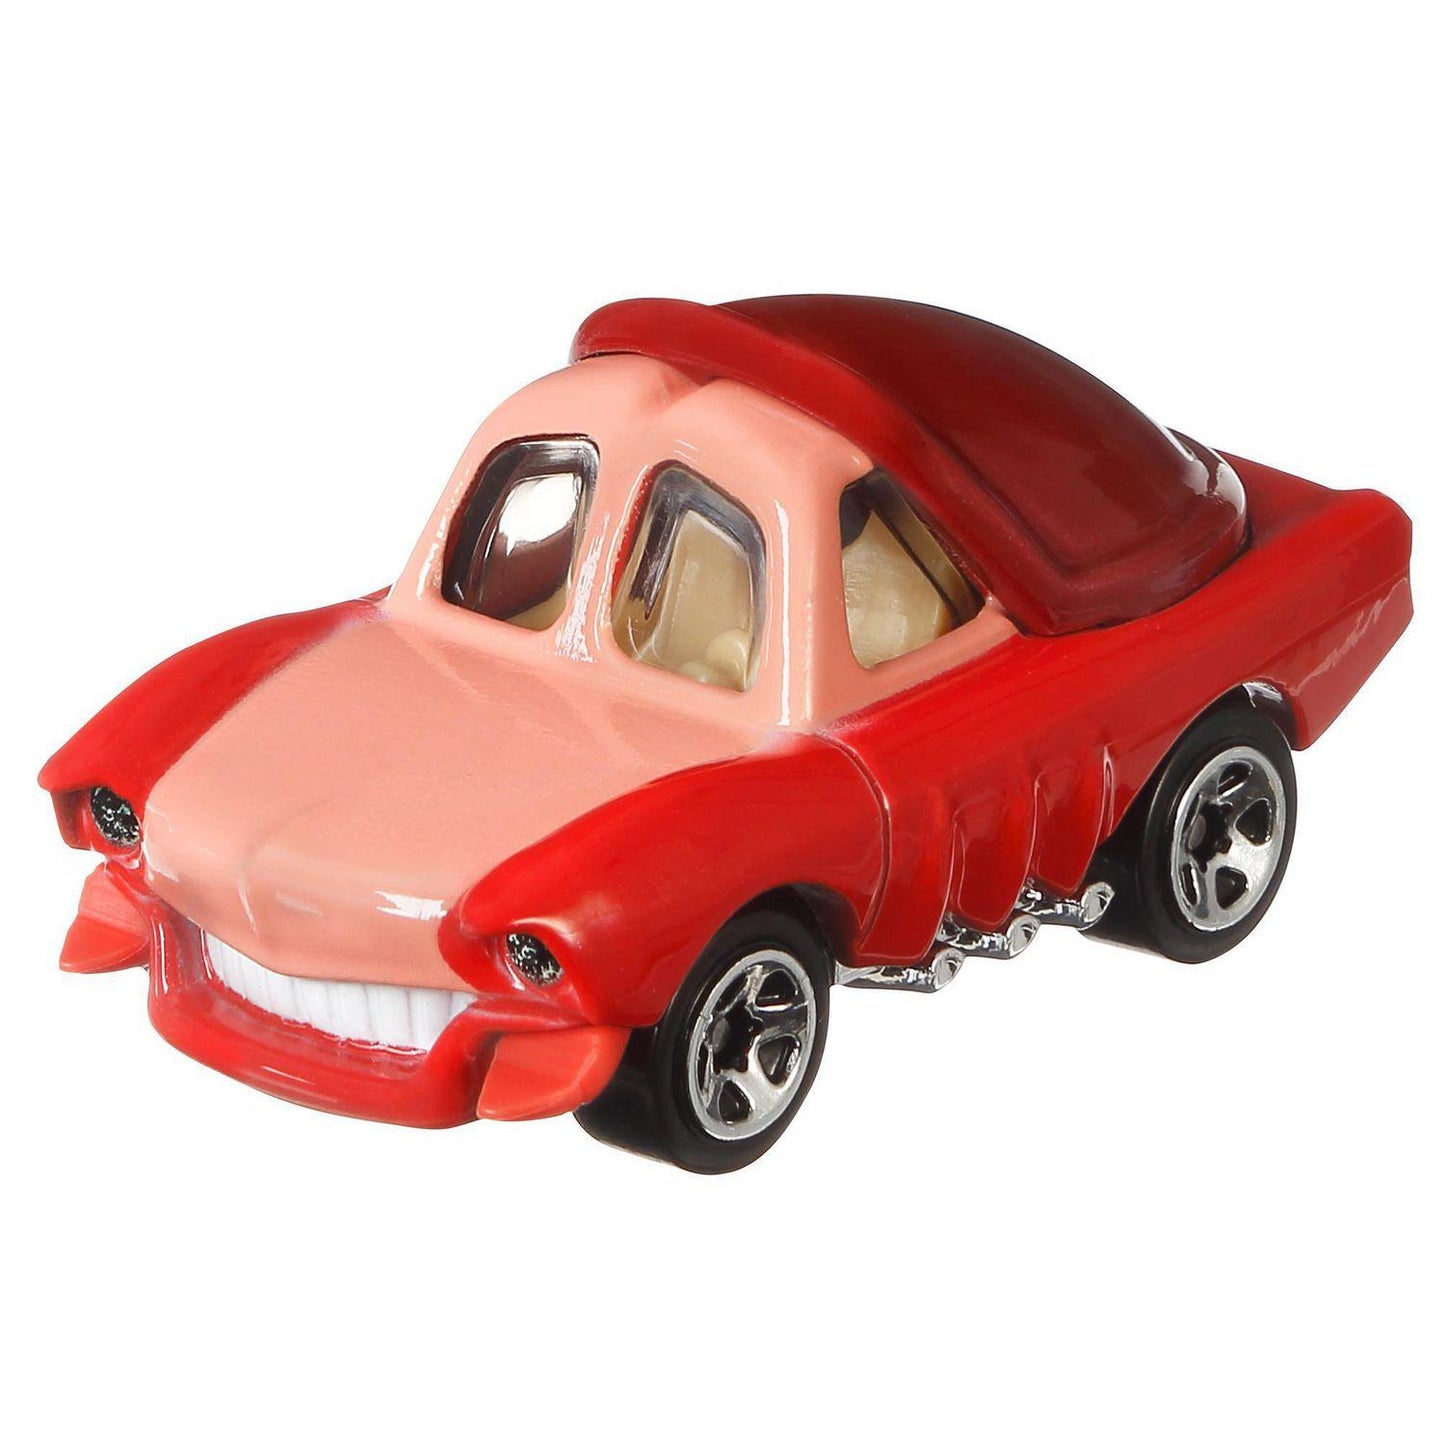 SEBASTIAN GGX58 Hot Wheels Disney Character Die-cast Car